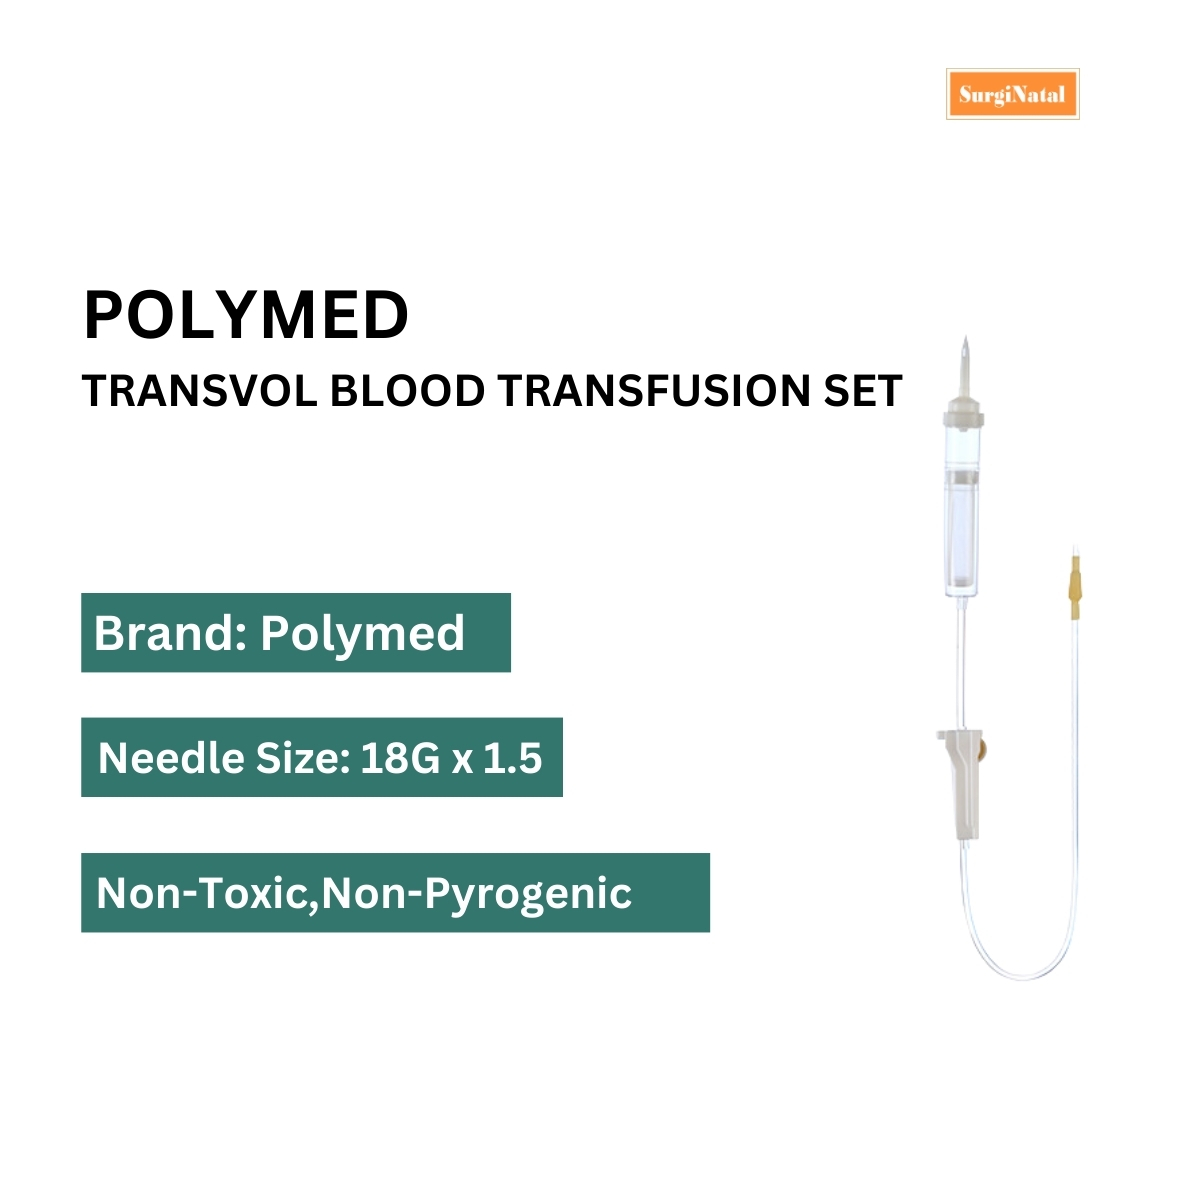  transvol blood transfusion set